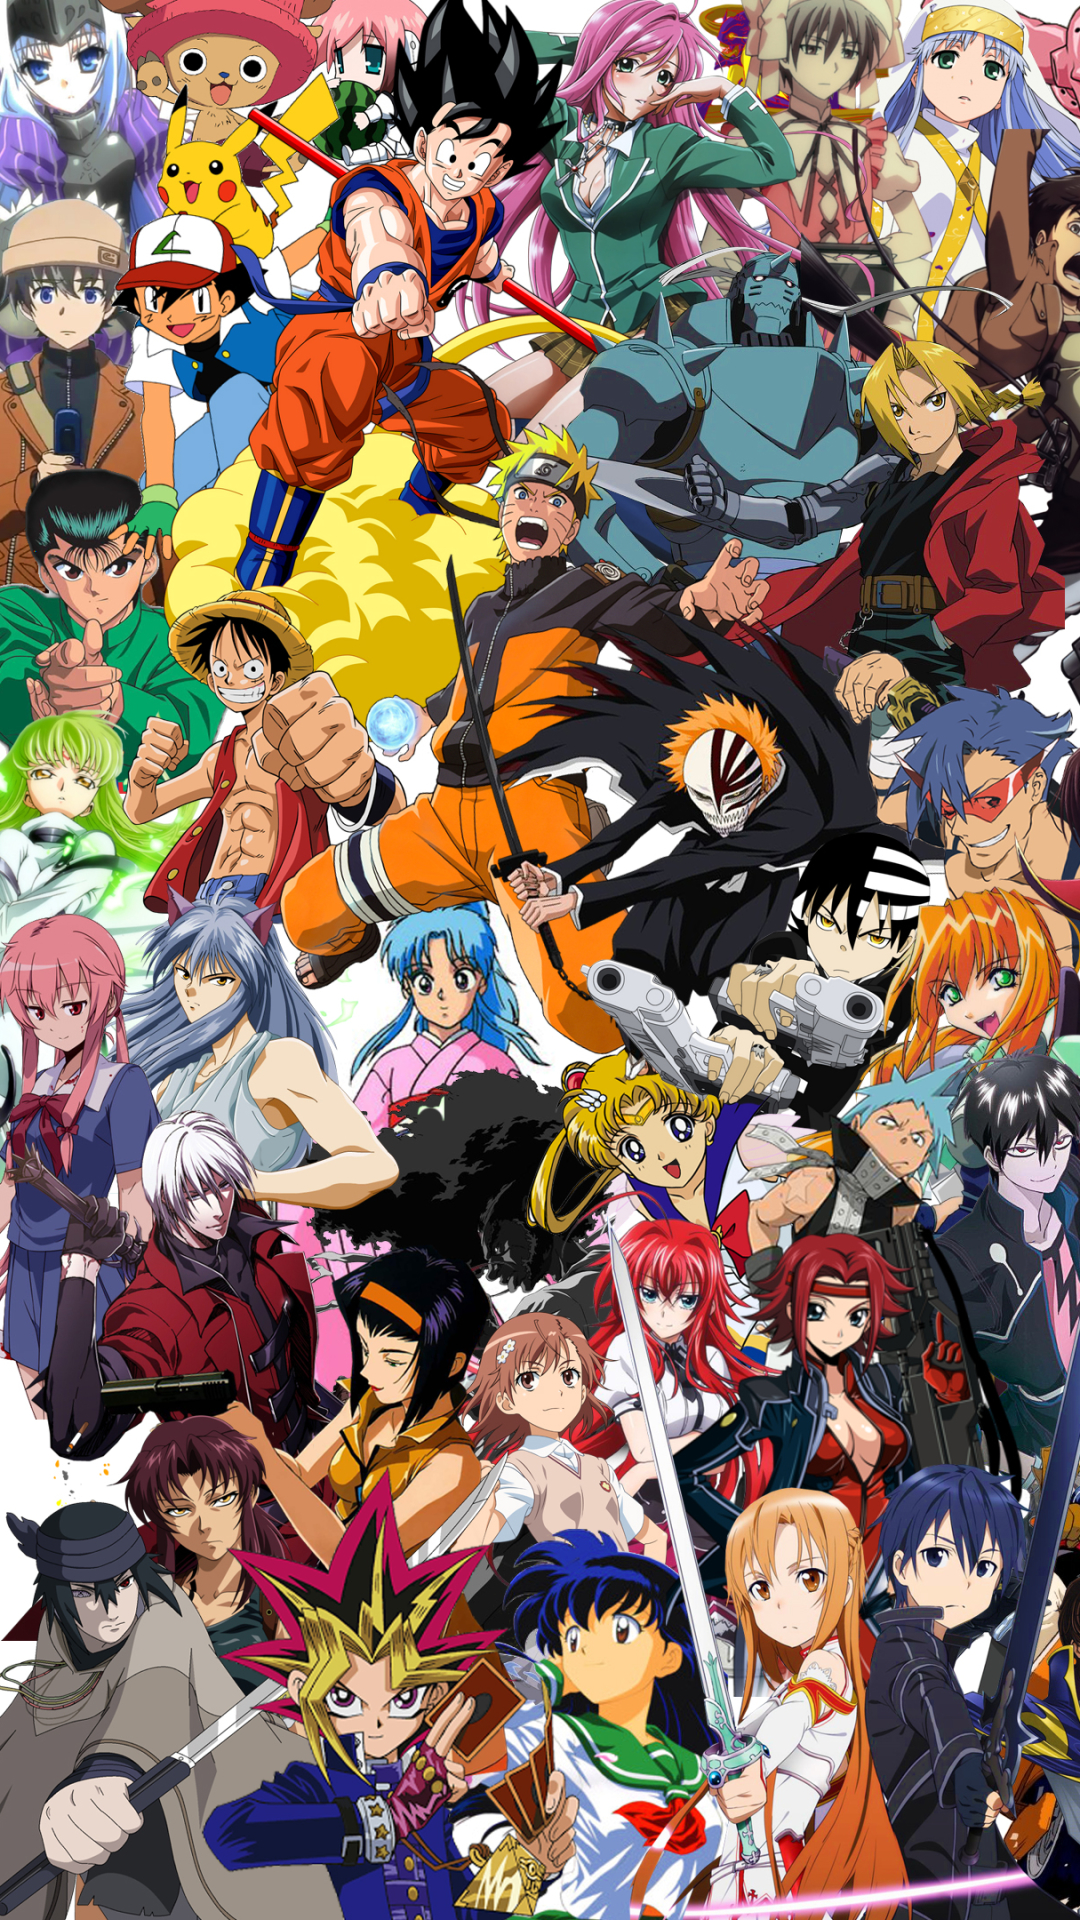 40+] Animes Crossover 2020 Wallpapers - WallpaperSafari